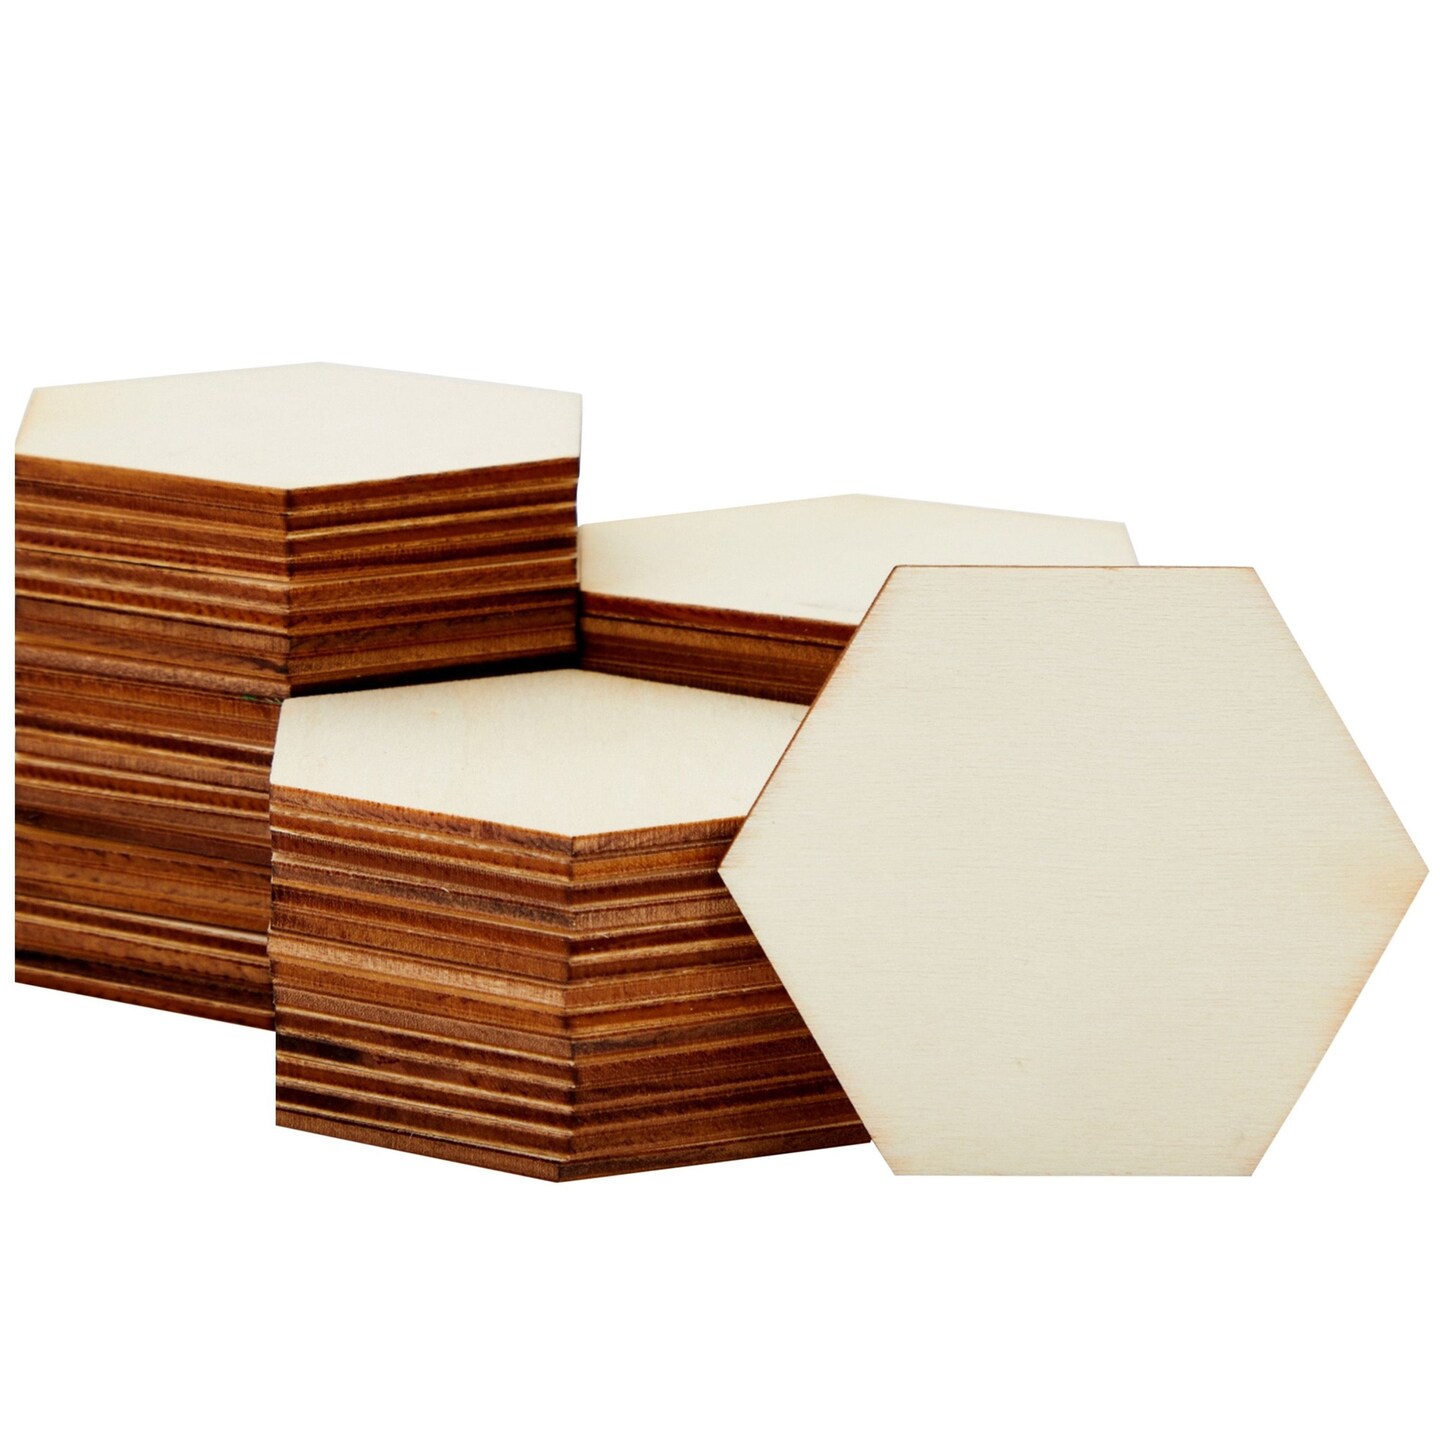 60 Pack Unfinished Wood Squares for Crafts Bulk Wooden Tiles 